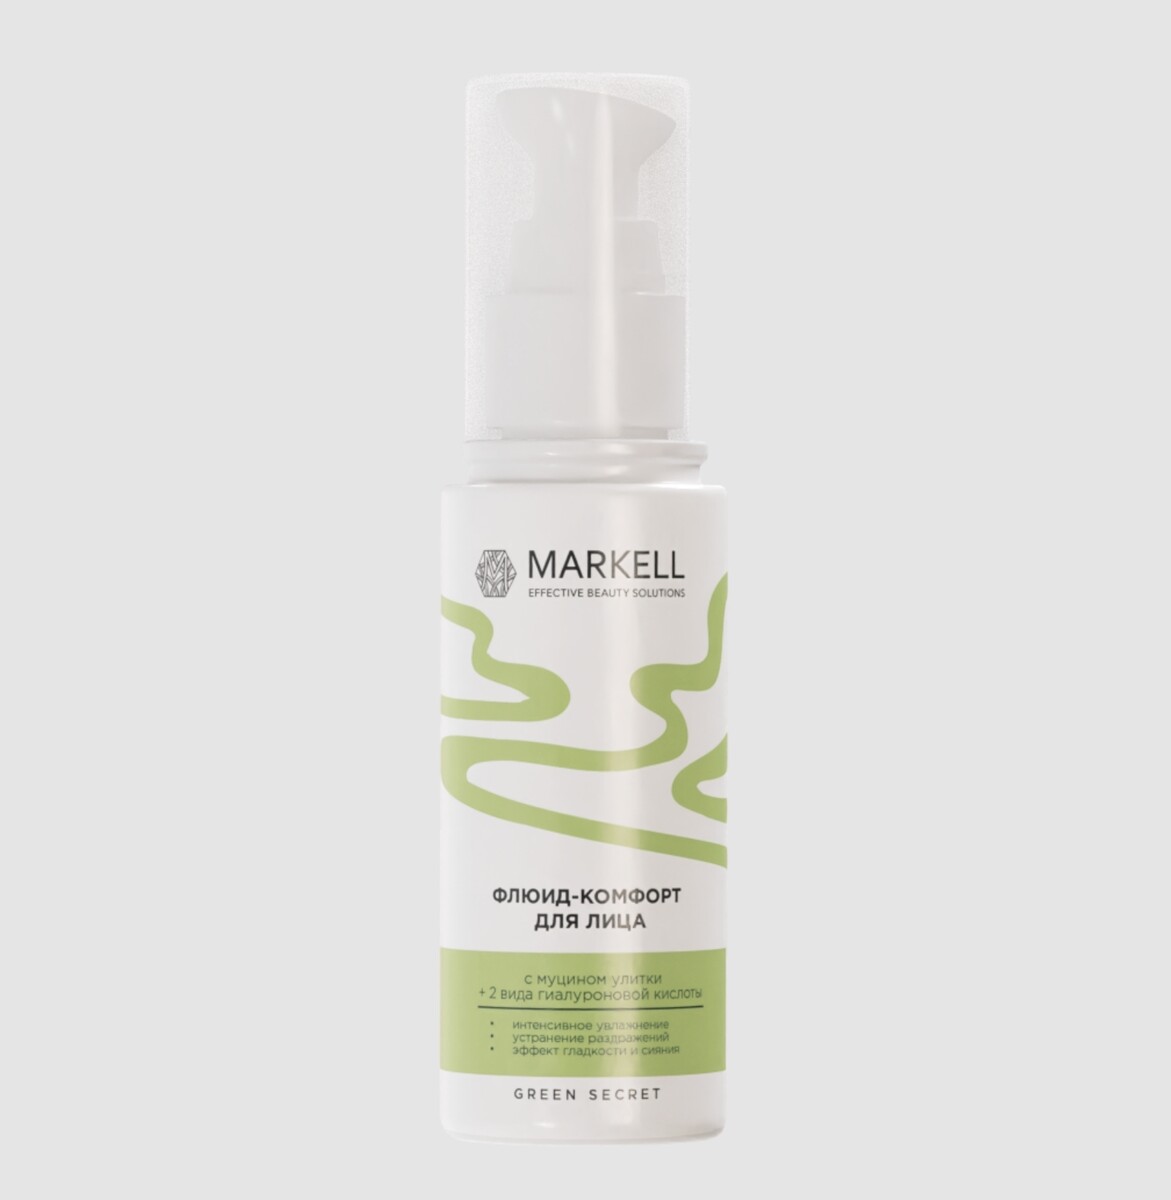 Markell green secret флюид-комфорт для лица,эффект гладкости и сияния 50мл pro bio флюид для лица 50мл